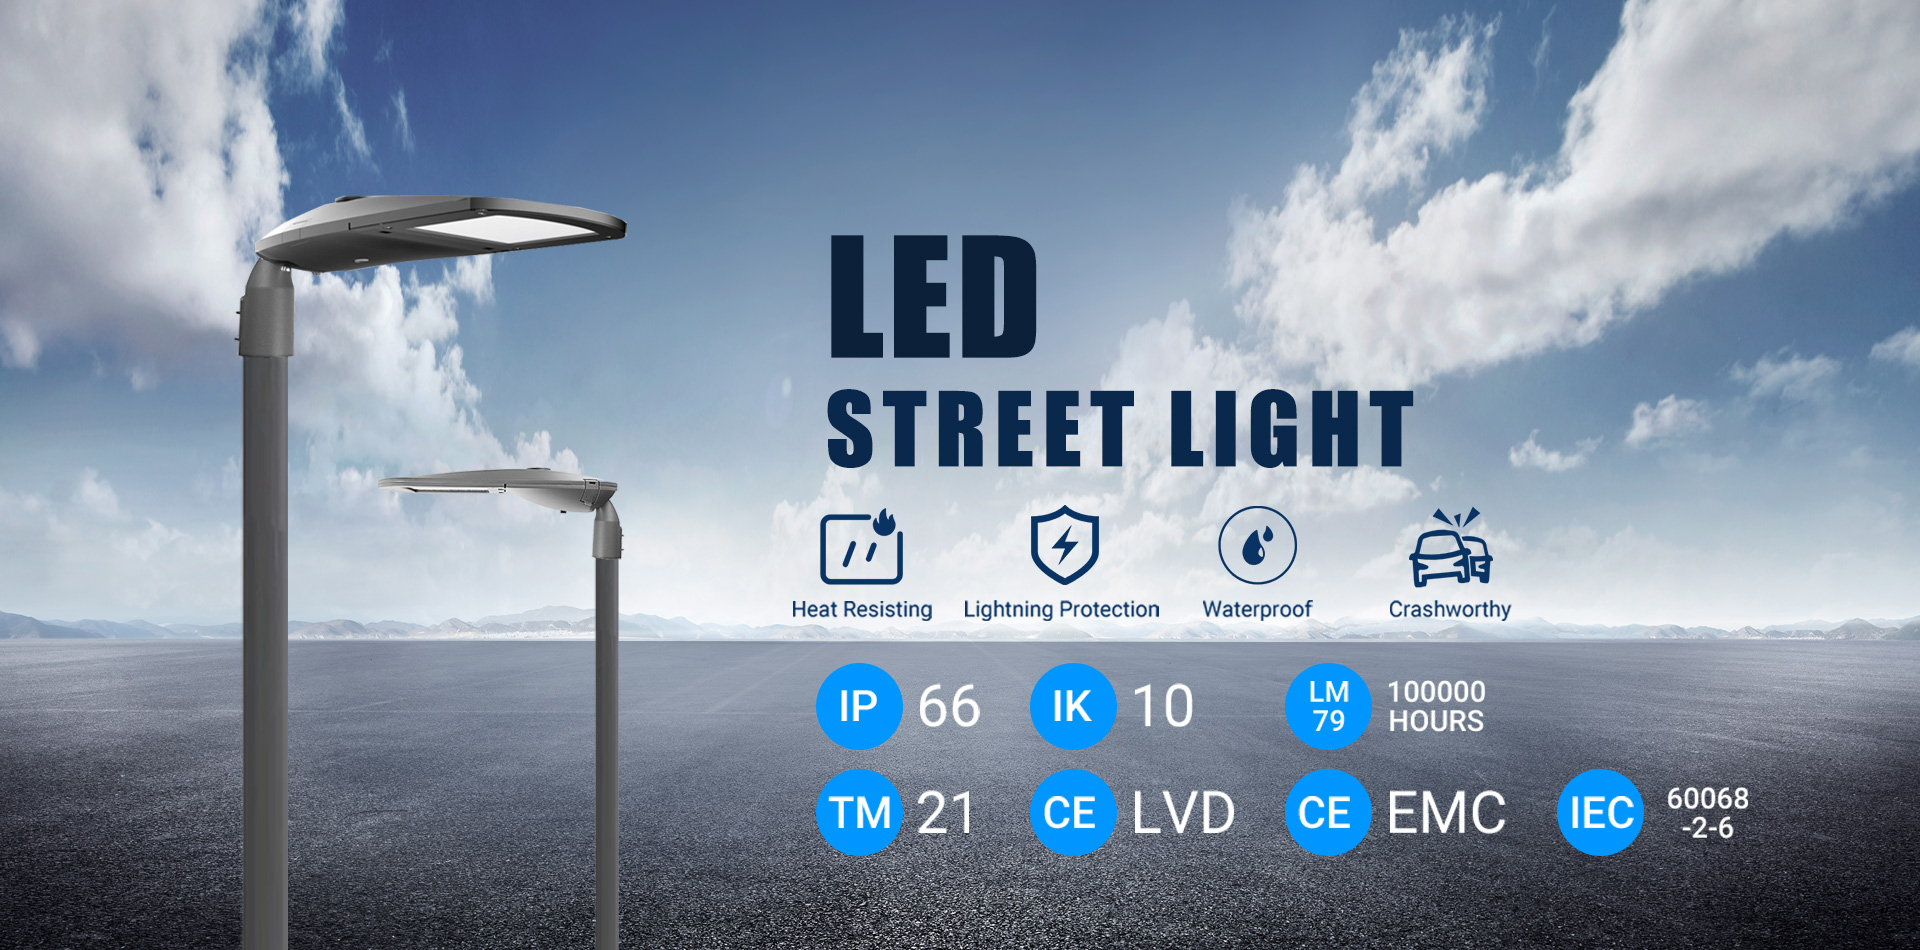 I-LED Street Light